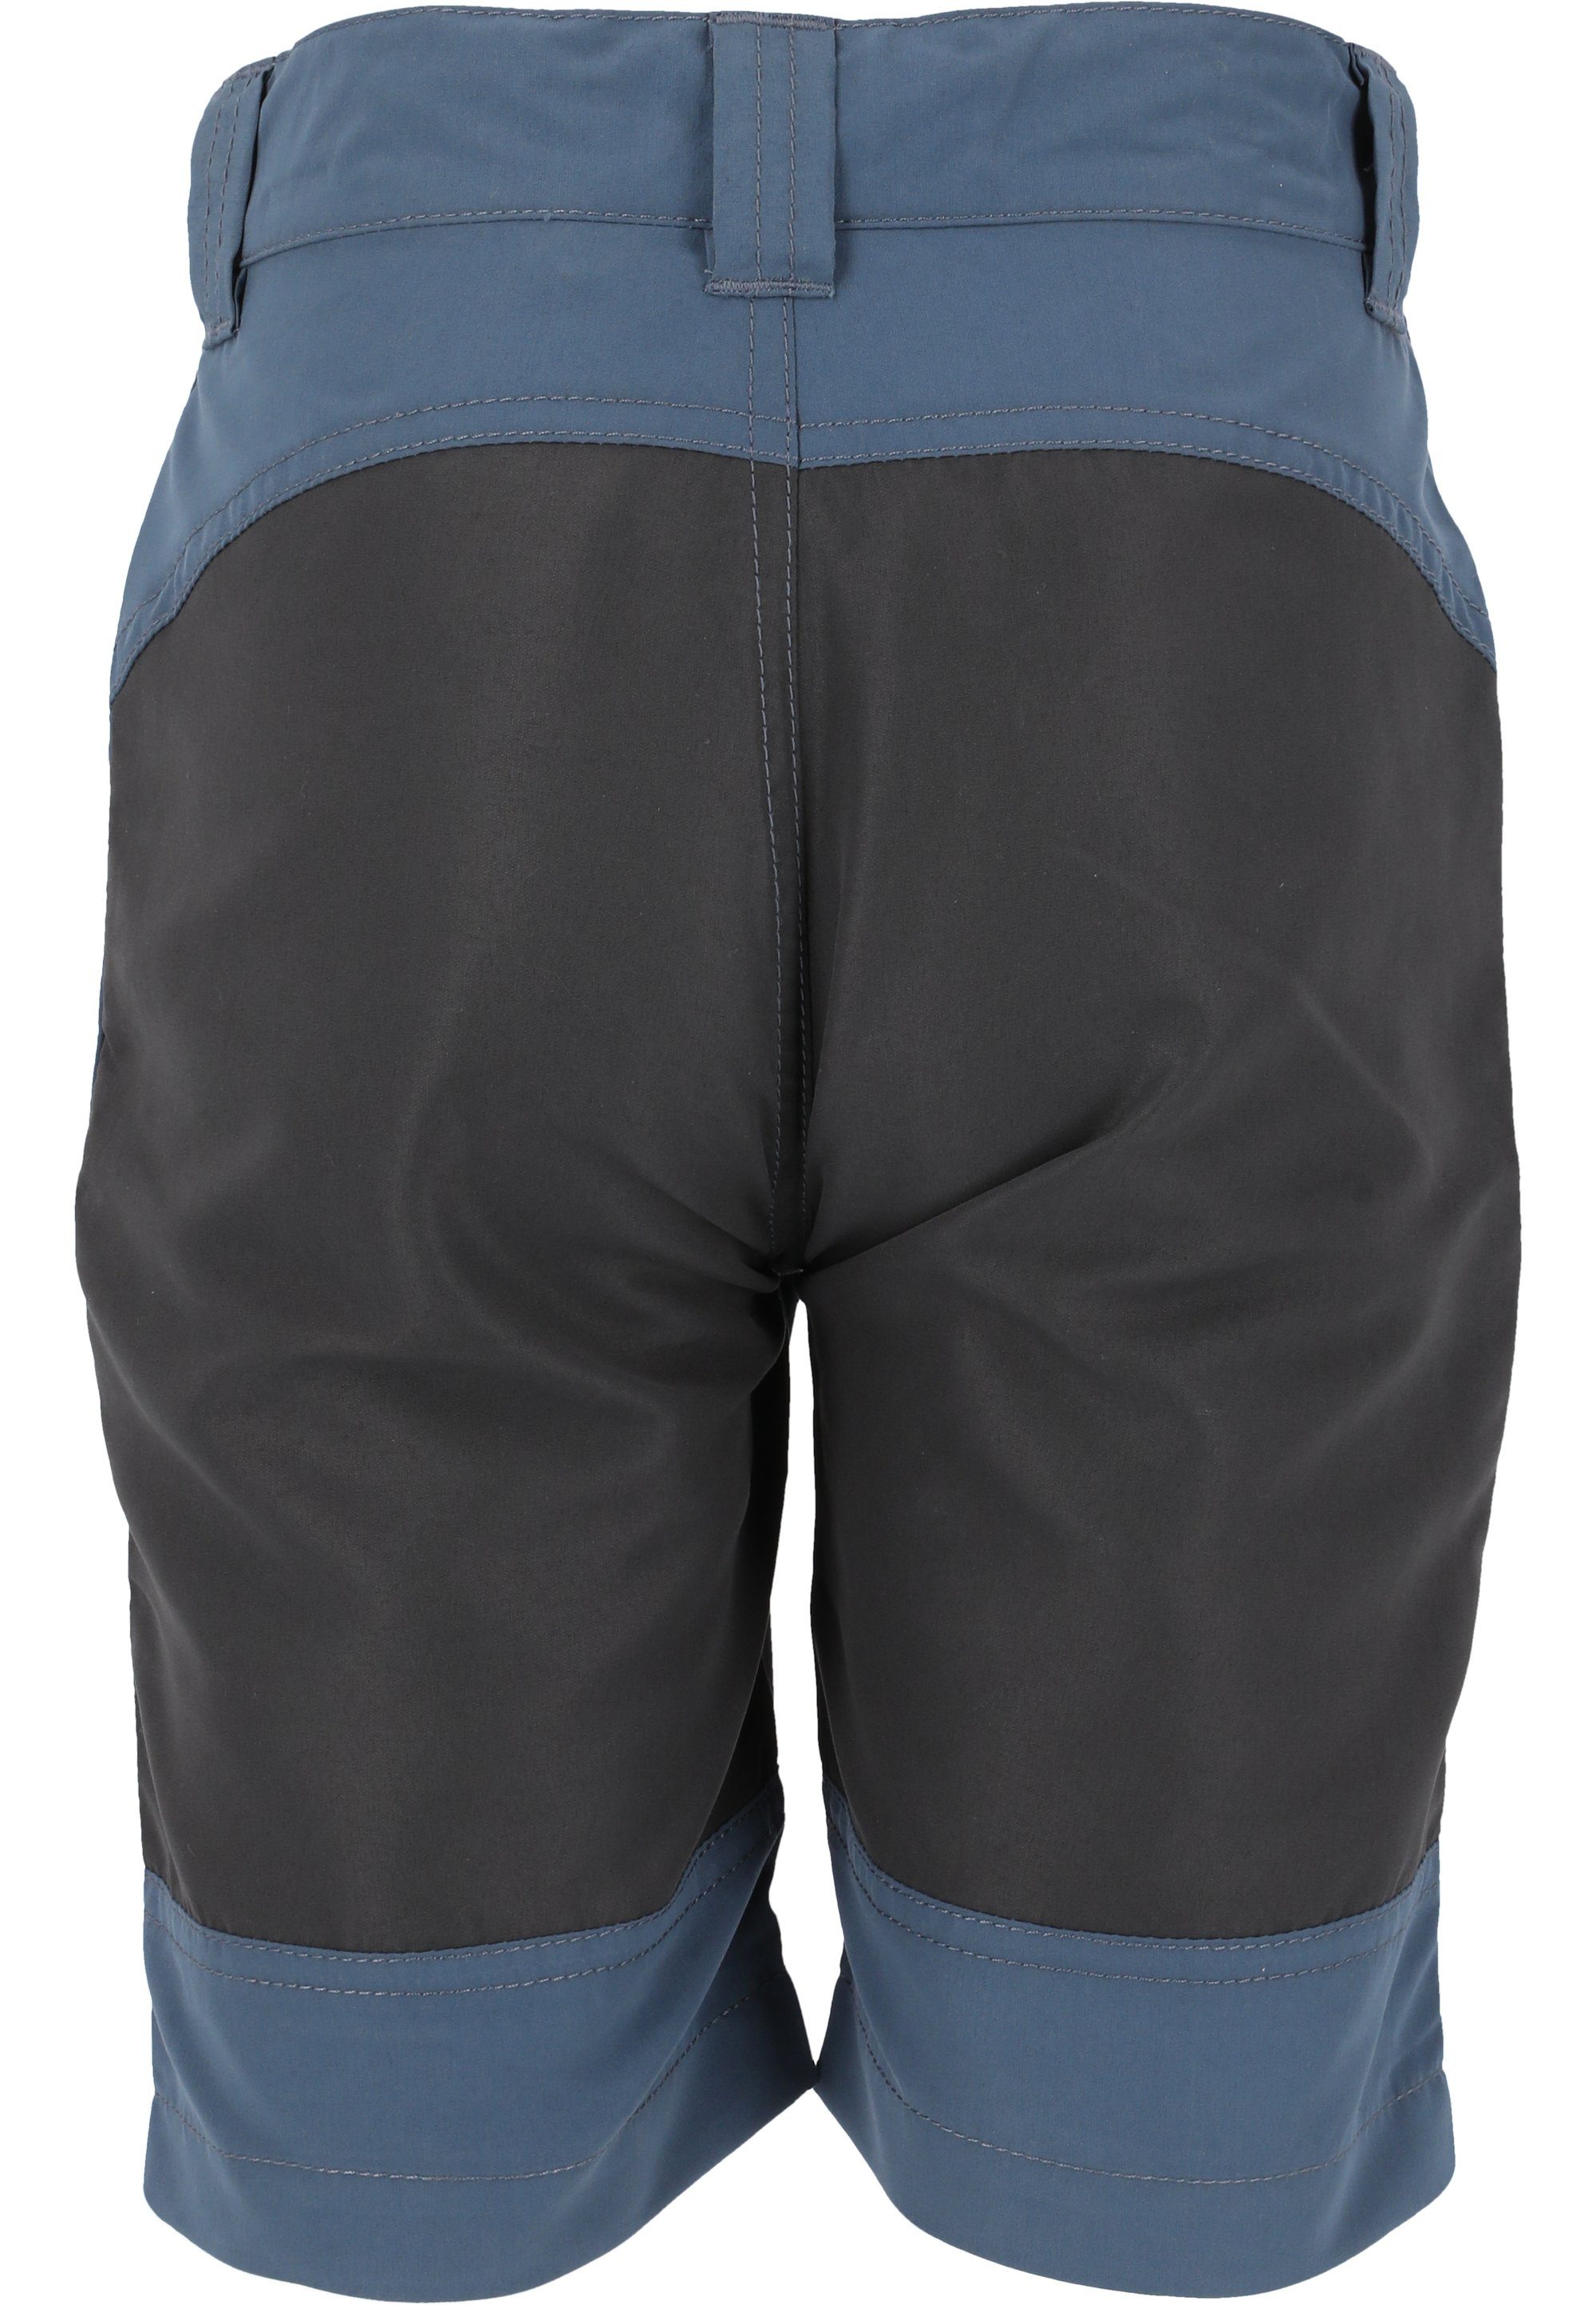 ZIGZAG aus Atlantic robustem Shorts blau-schwarz Material